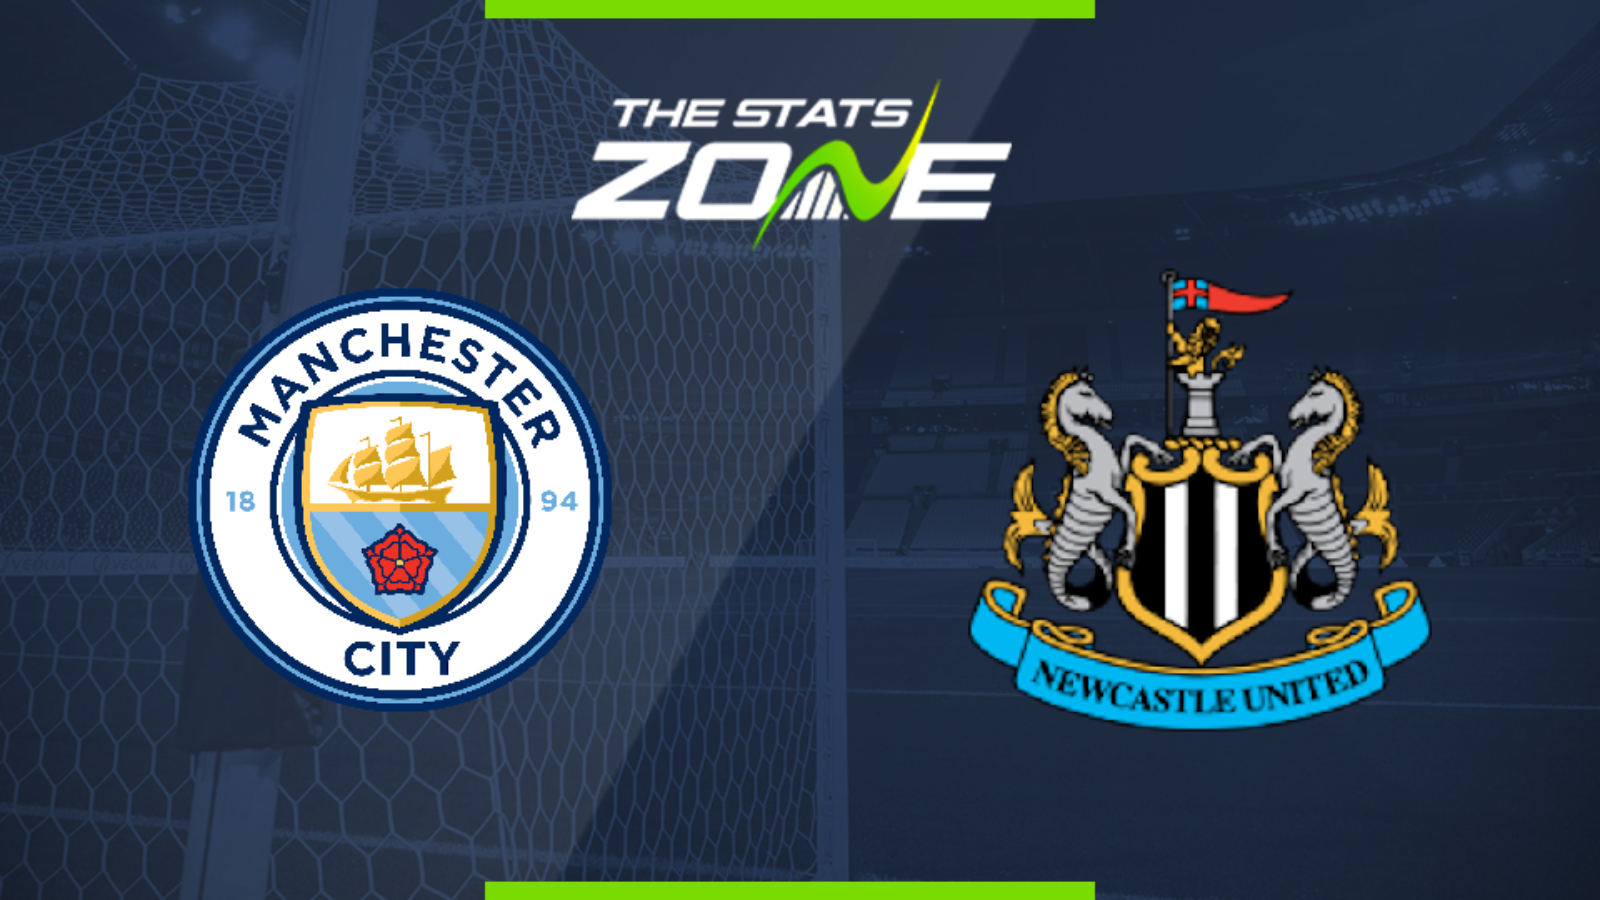 2019 20 Premier League Man City Vs Newcastle Preview Prediction The Stats Zone